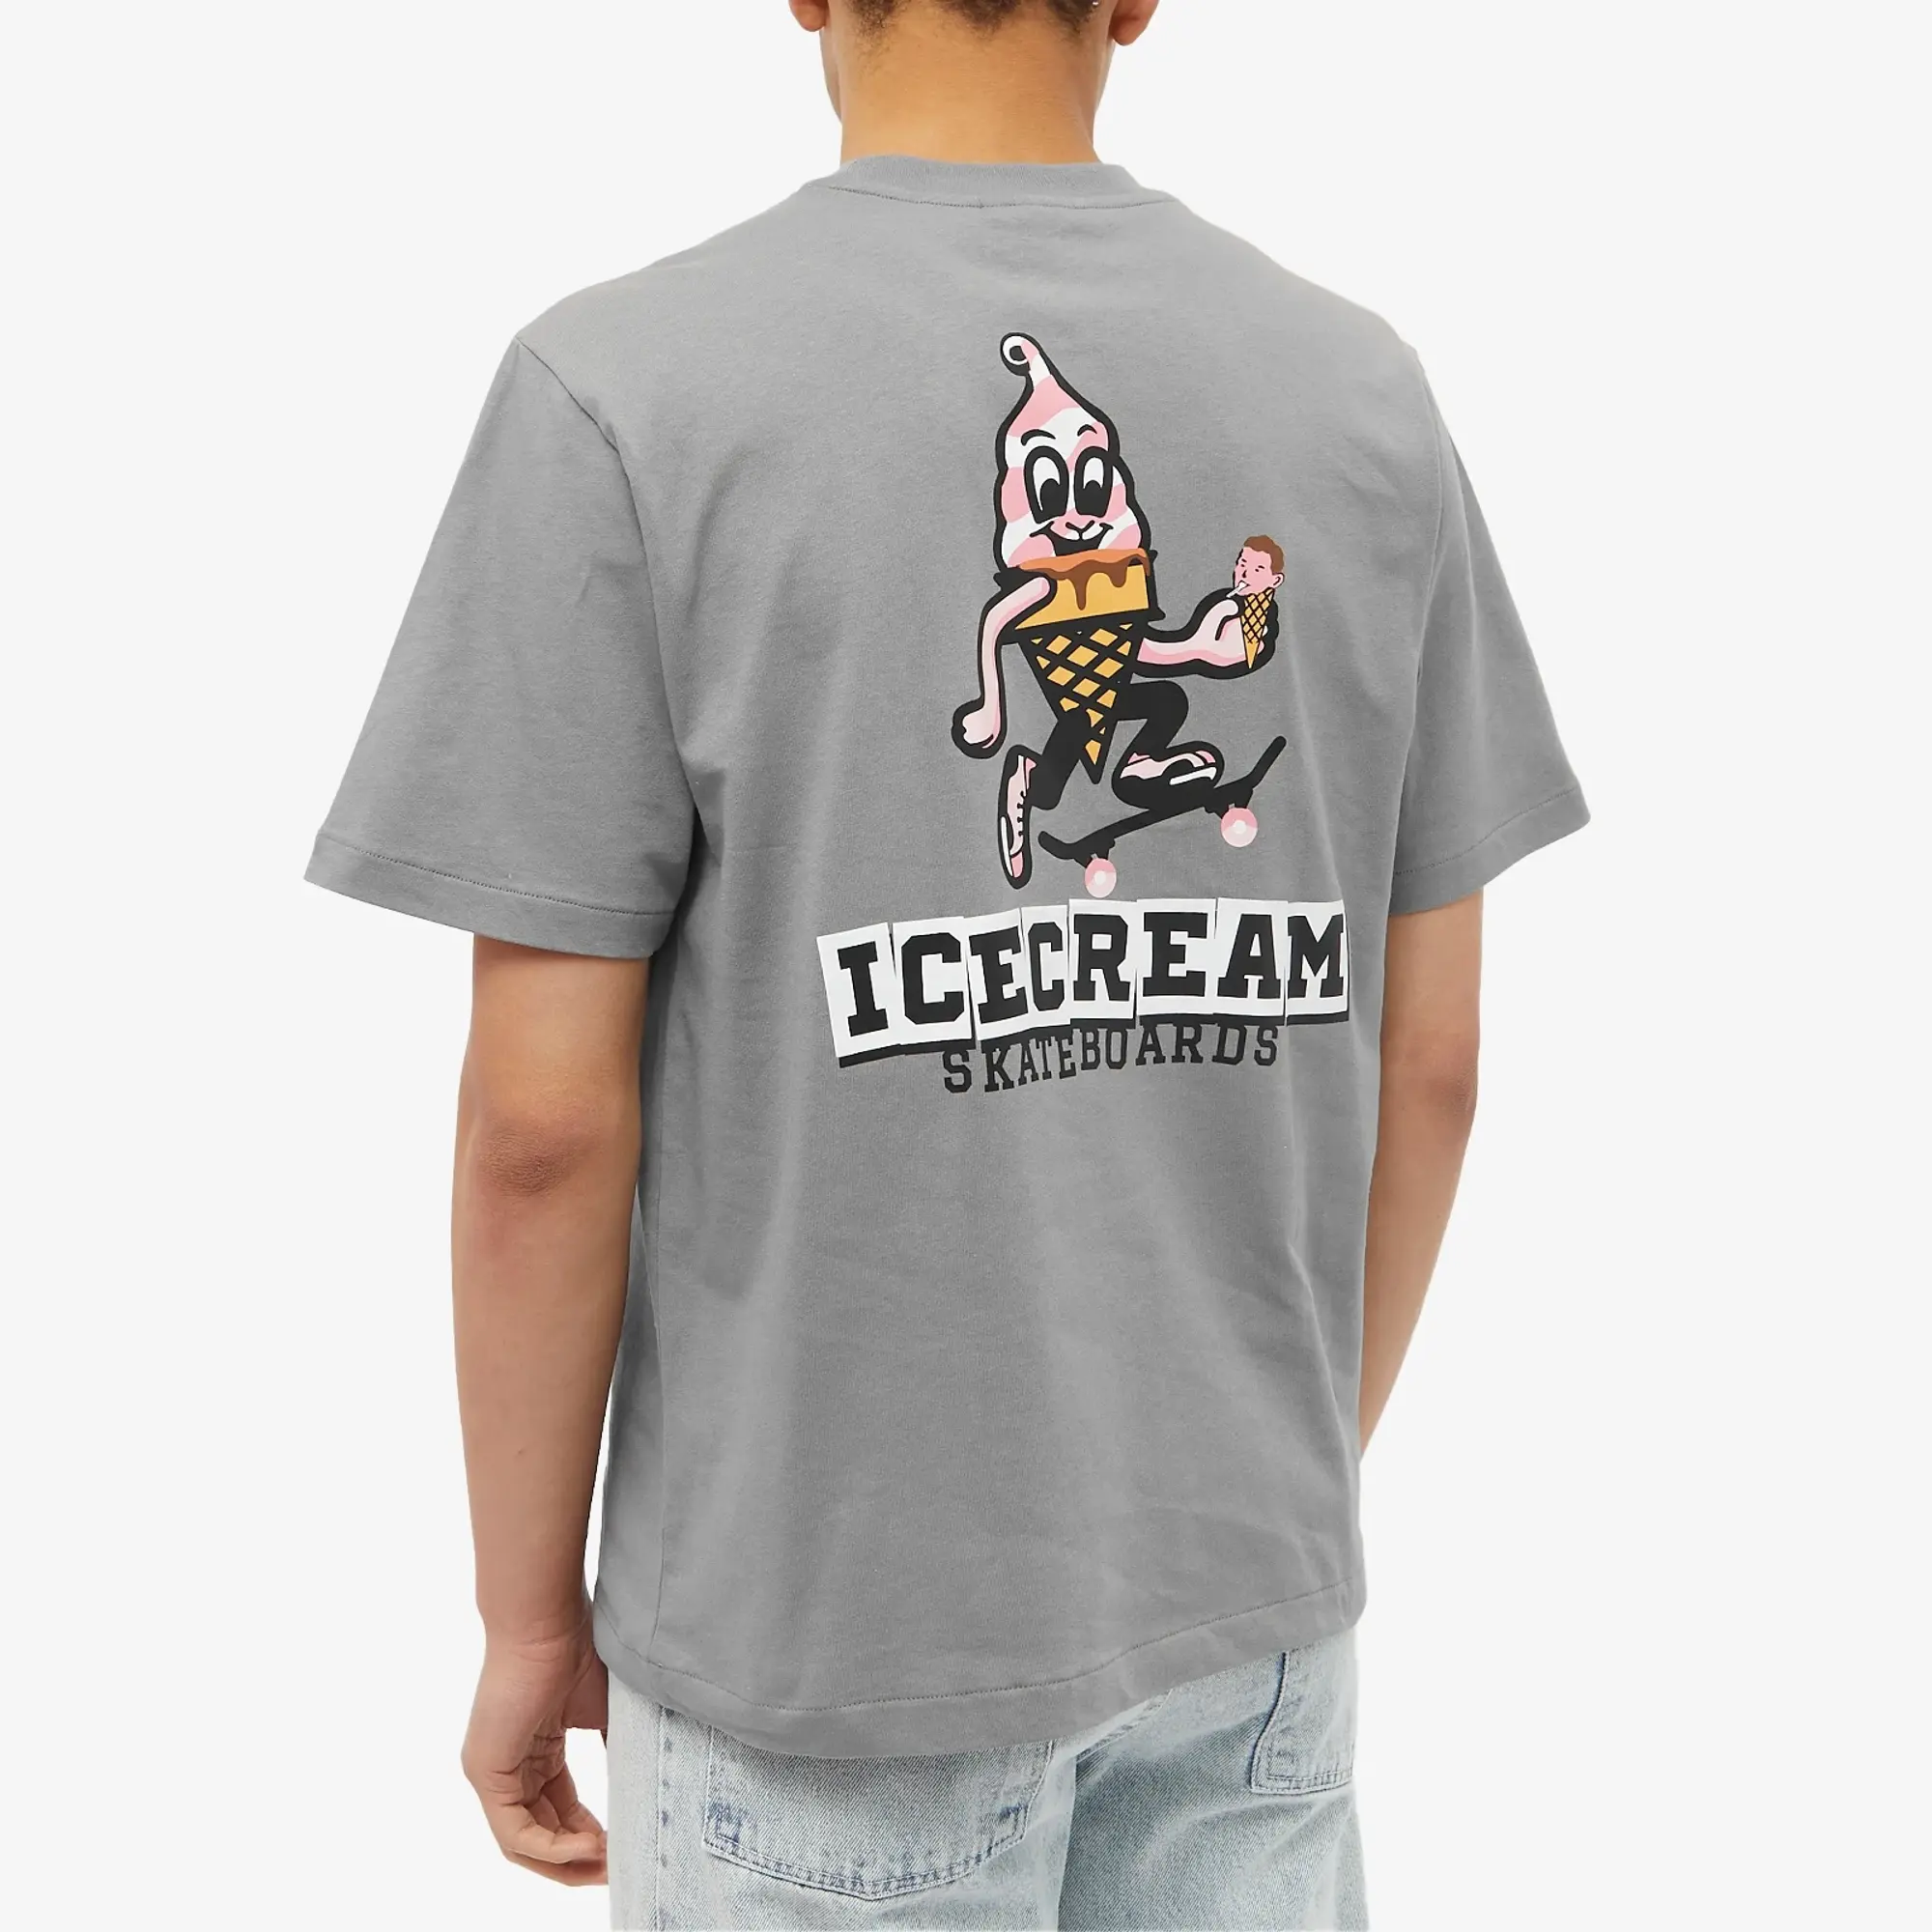 ICECREAM Men's IC Skateboards T-Shirt Grey